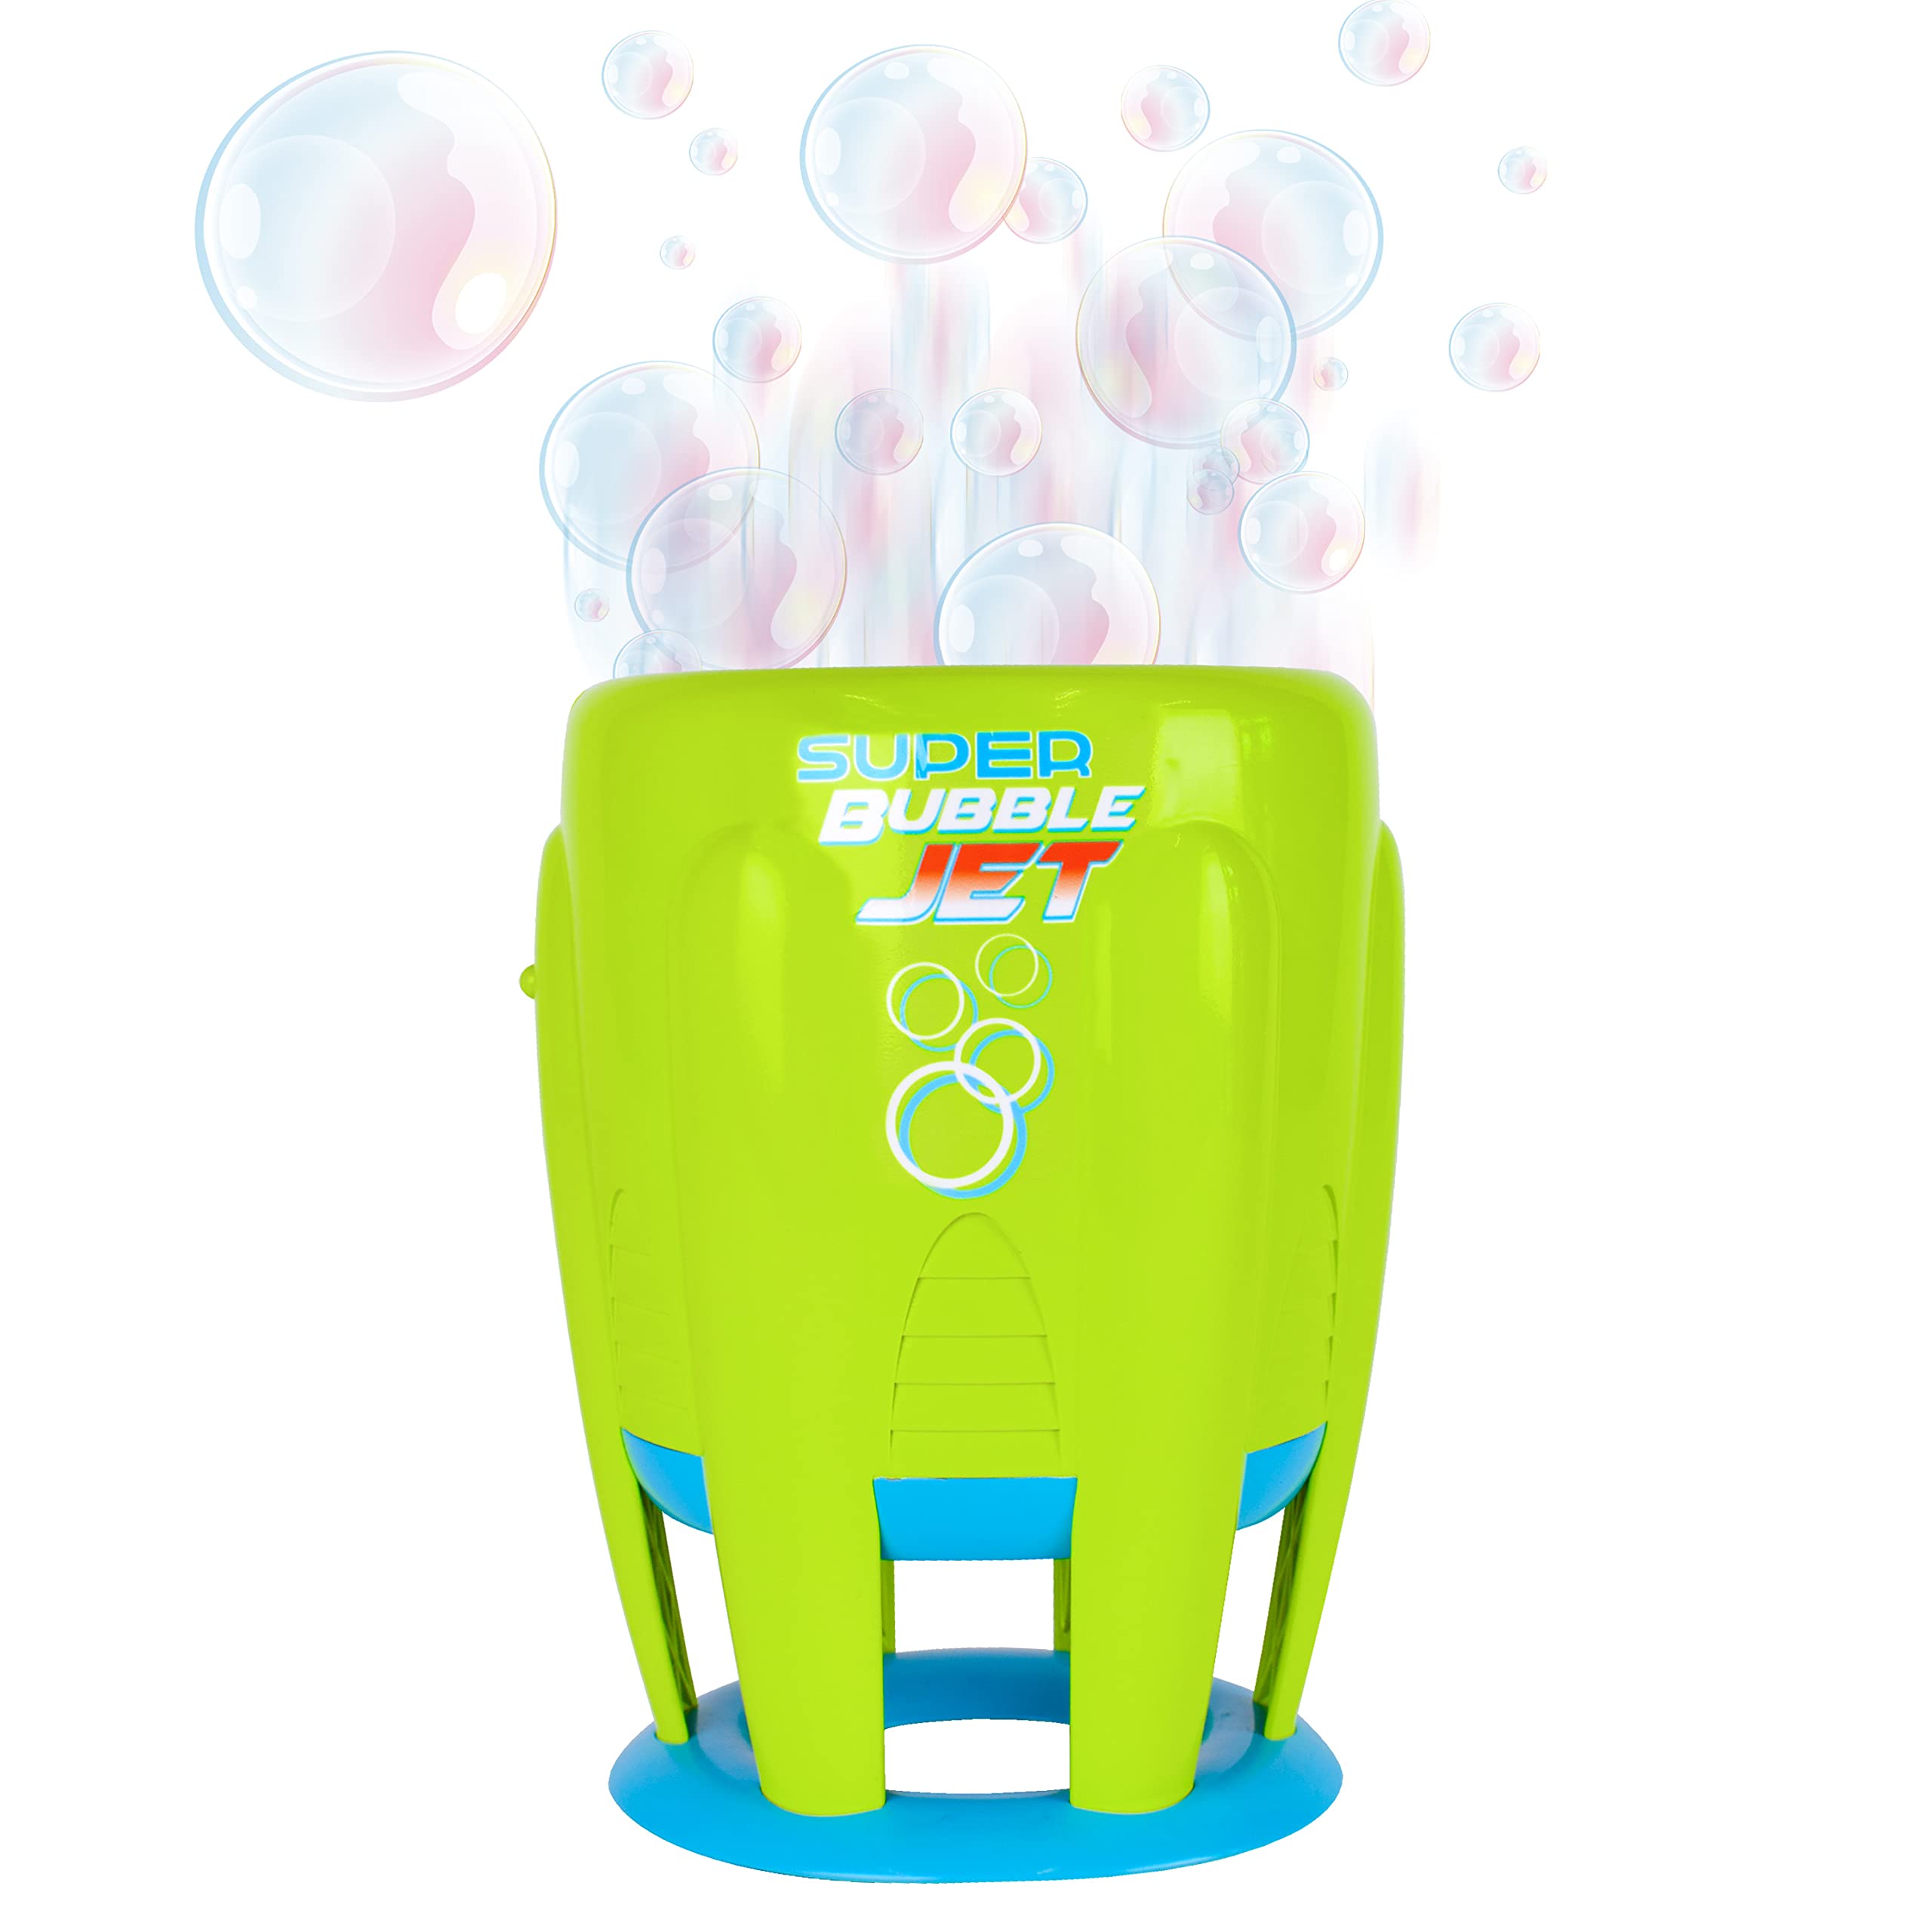 Maxx Bubbles Super Bubble Jet | Green Automatic Bubble Blowing Machine for Kids | Bubble Solution Included - Sunny Days Entertainment $4.99